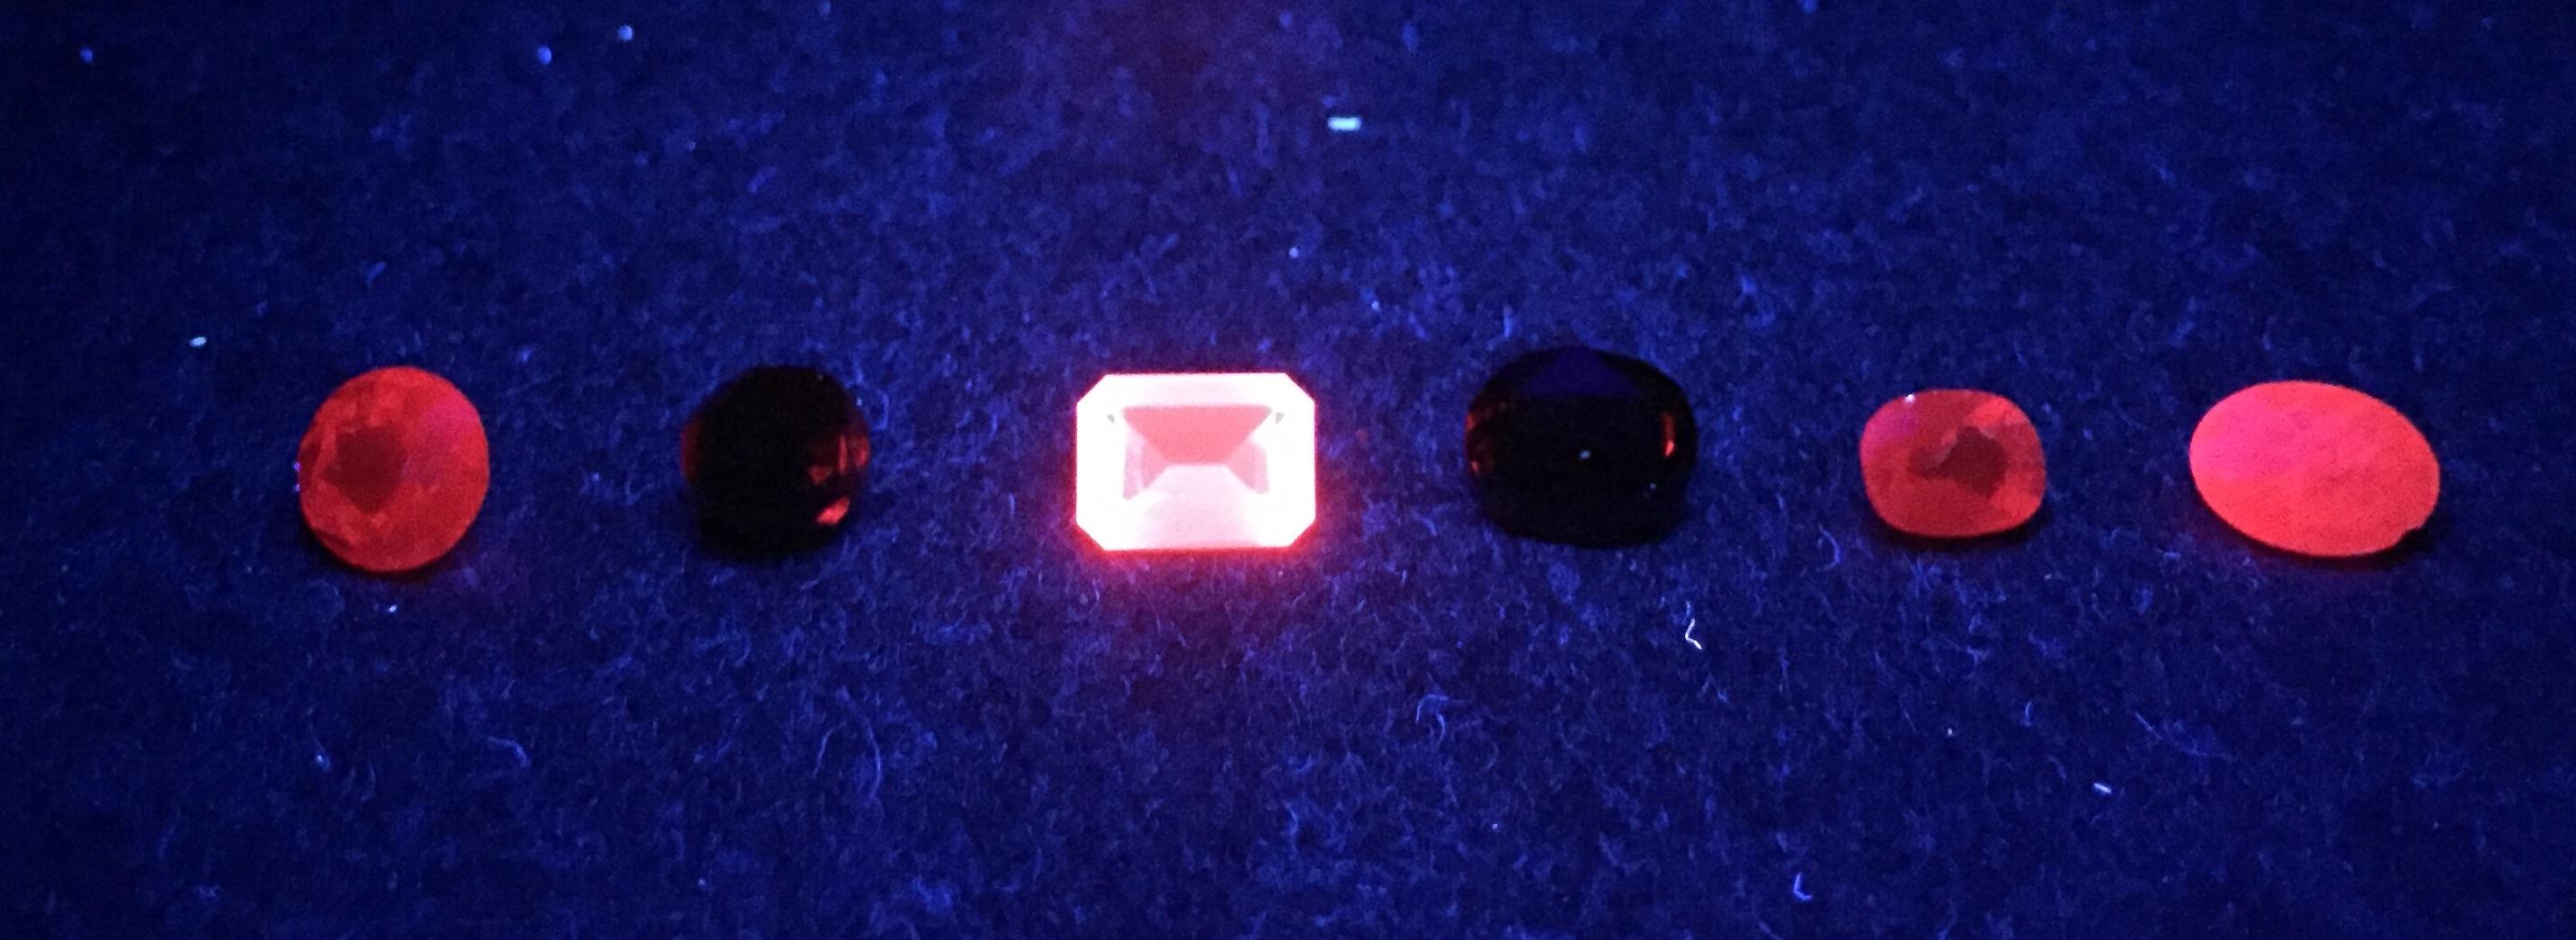 Jewelry Gem UV Fluorescent Light Box Set Gemstone Identification